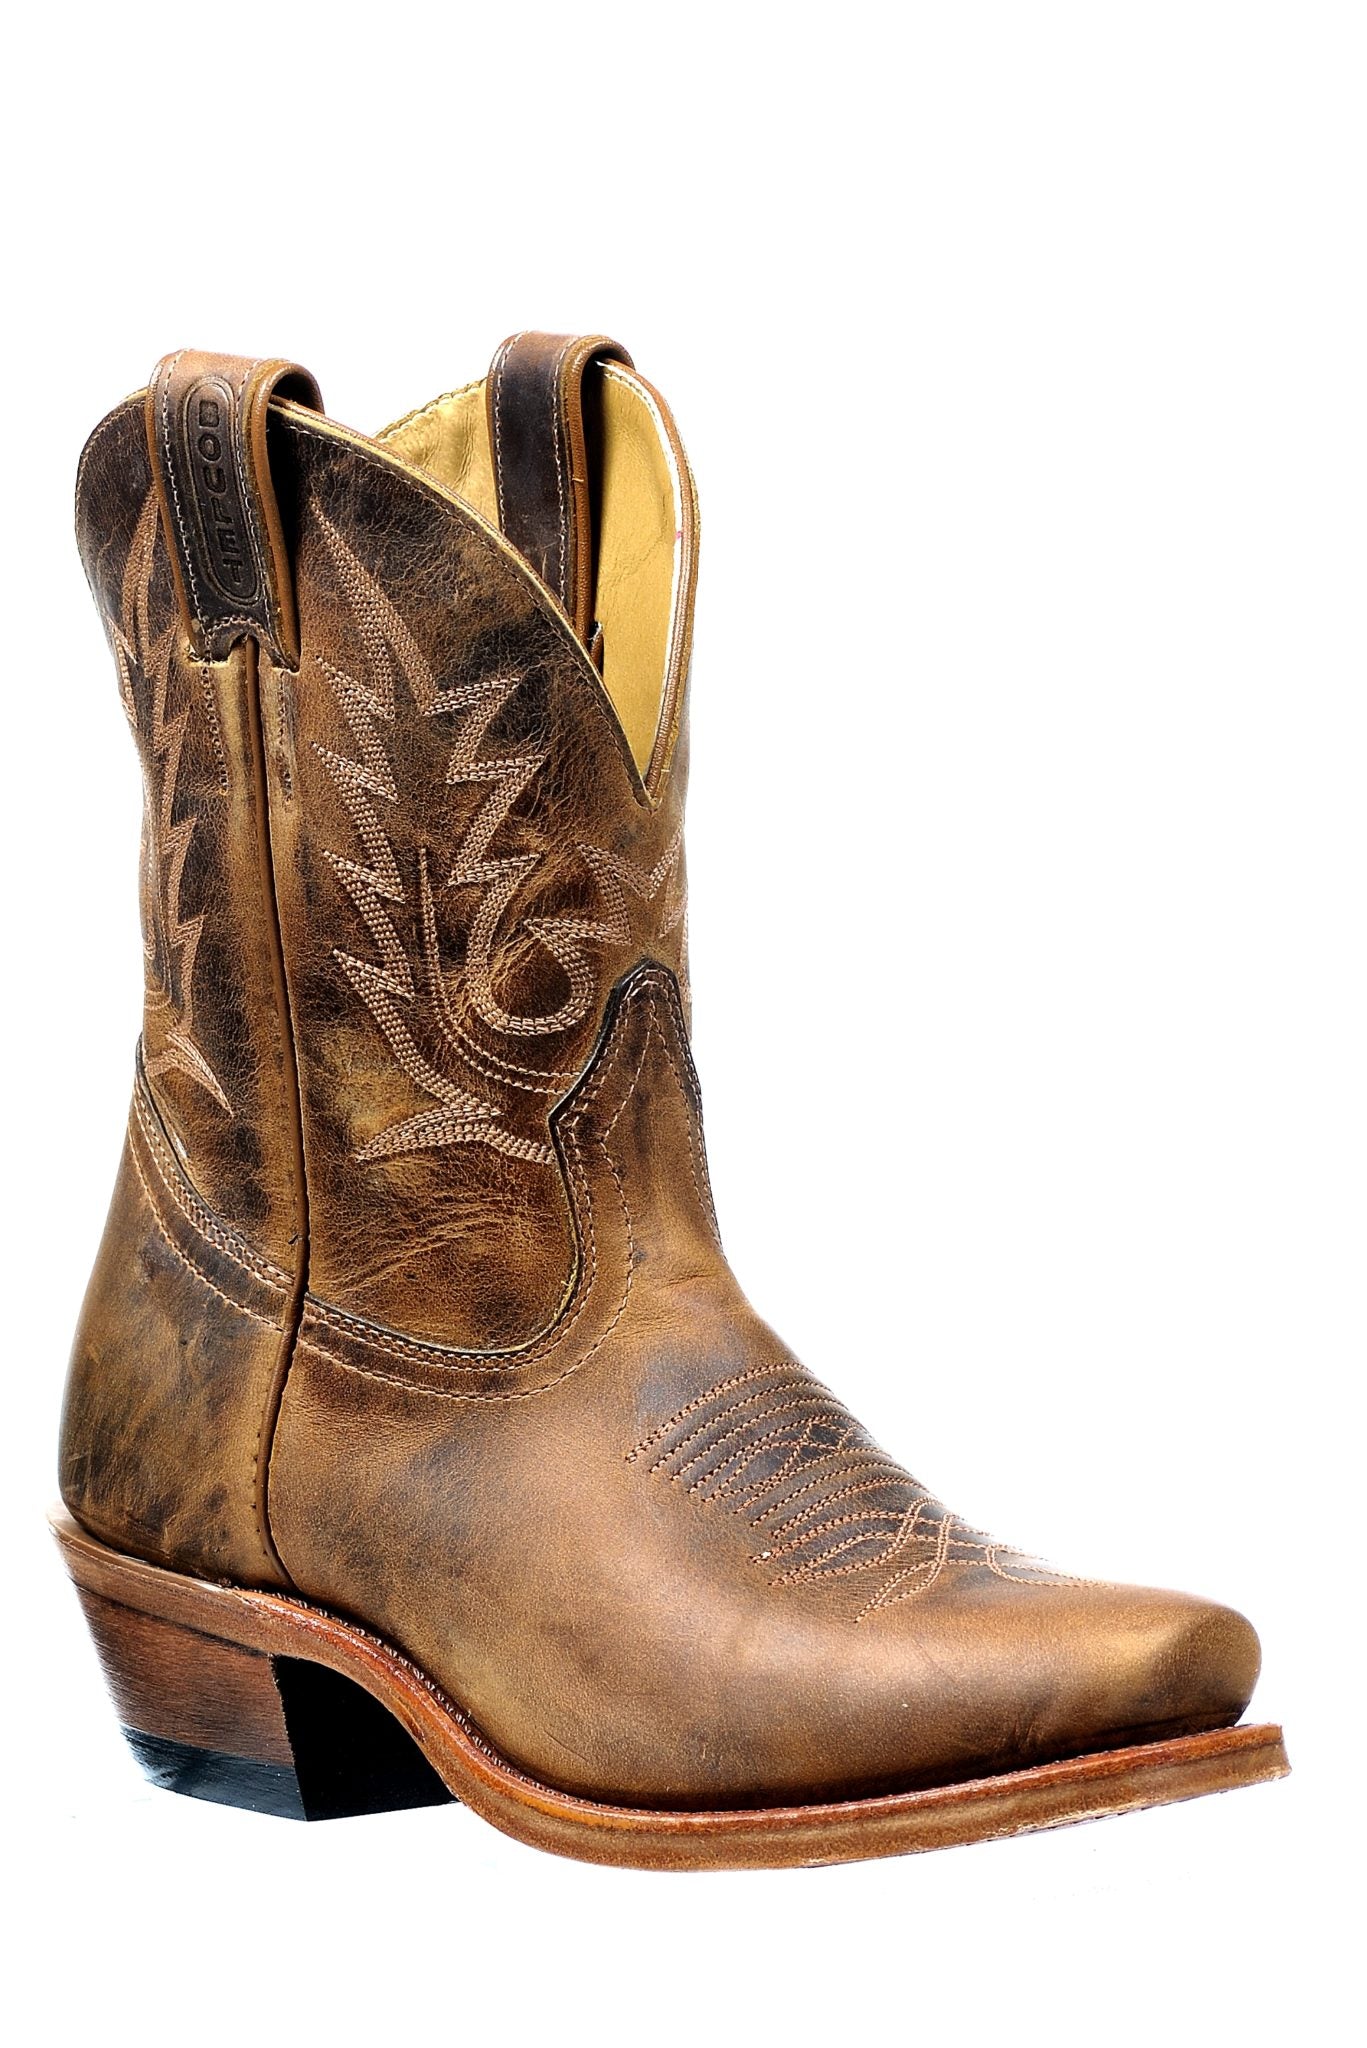 Boot Women's (2939) - 9" Cutter Toe in Hillbilly Golden